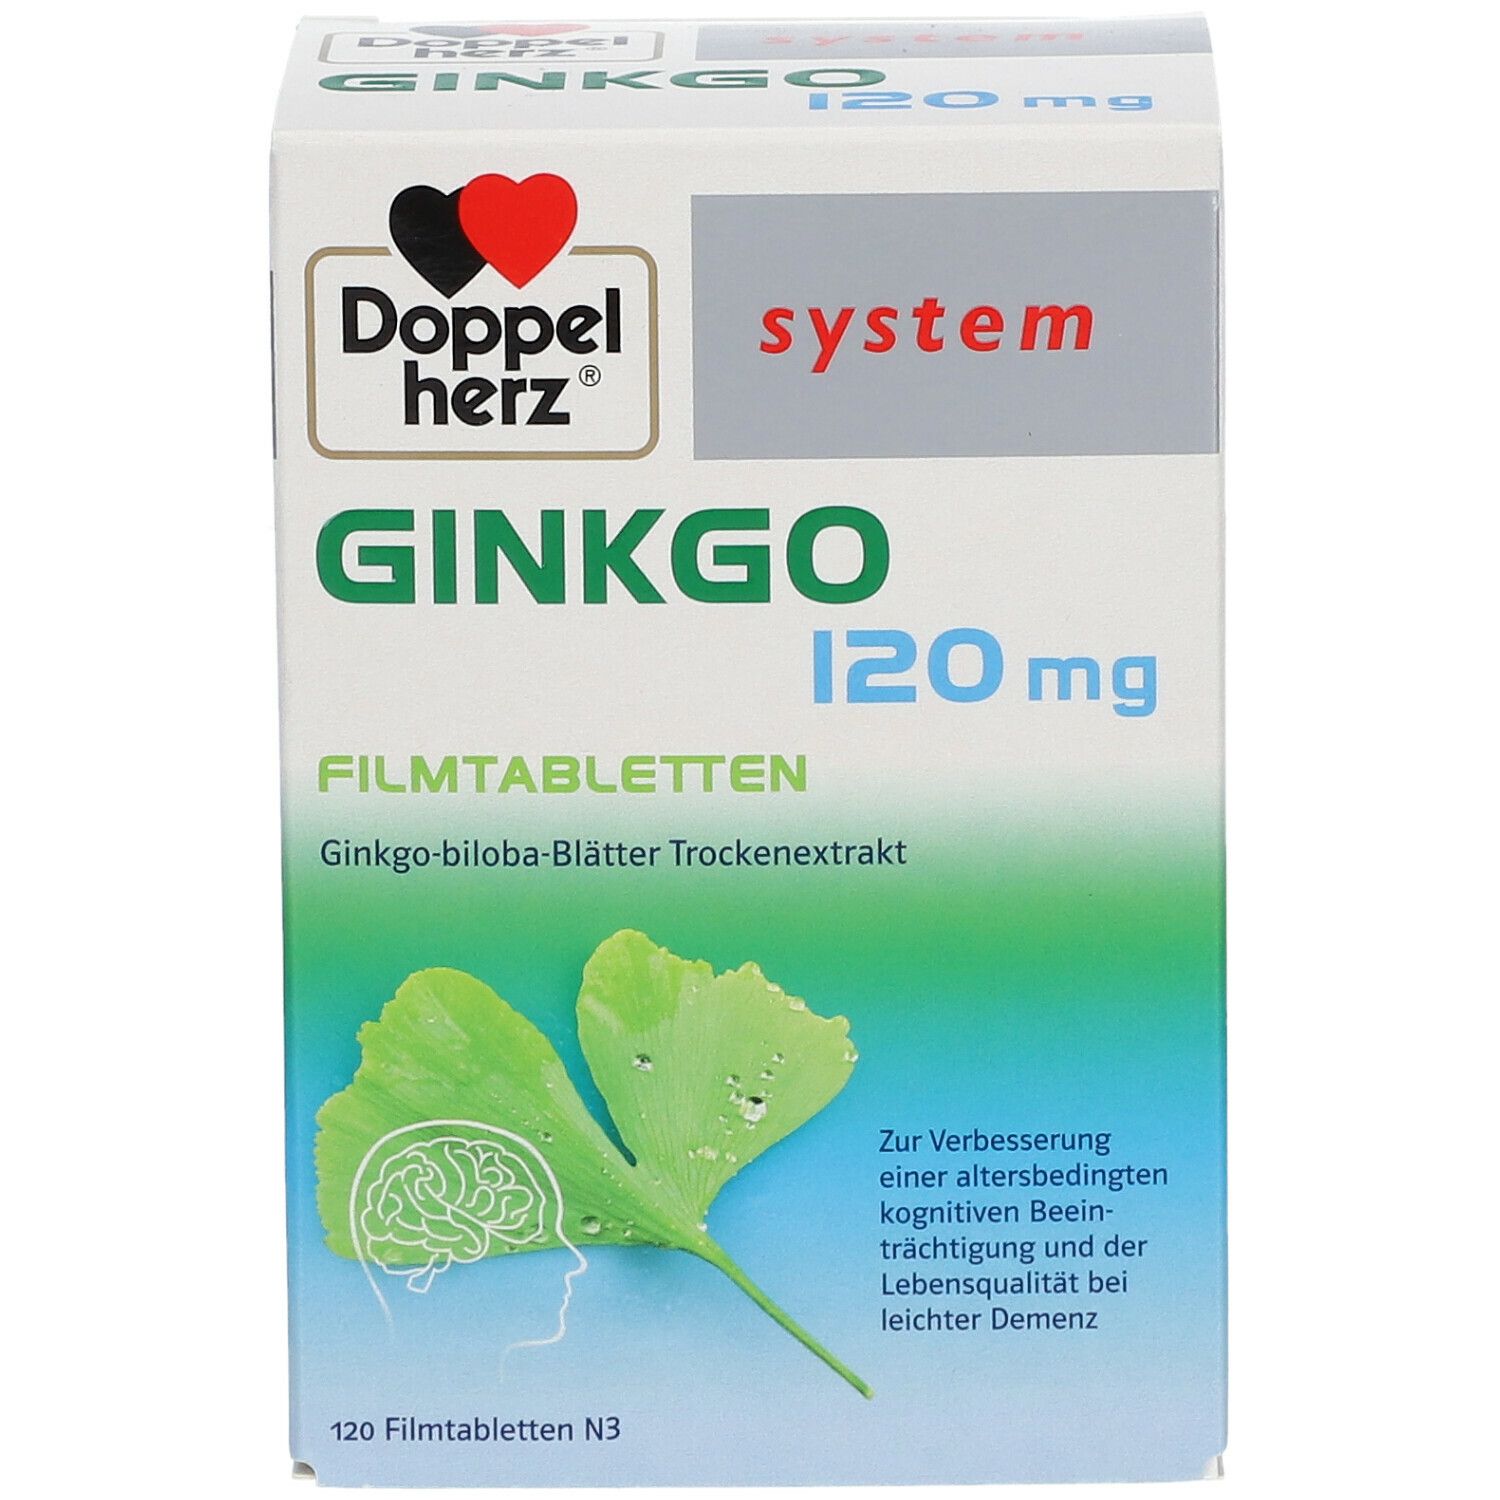 Evalar Ginkgo Biloba 40 MG 40-200 Tab Speicher Durchblutung Gmp Qualität 